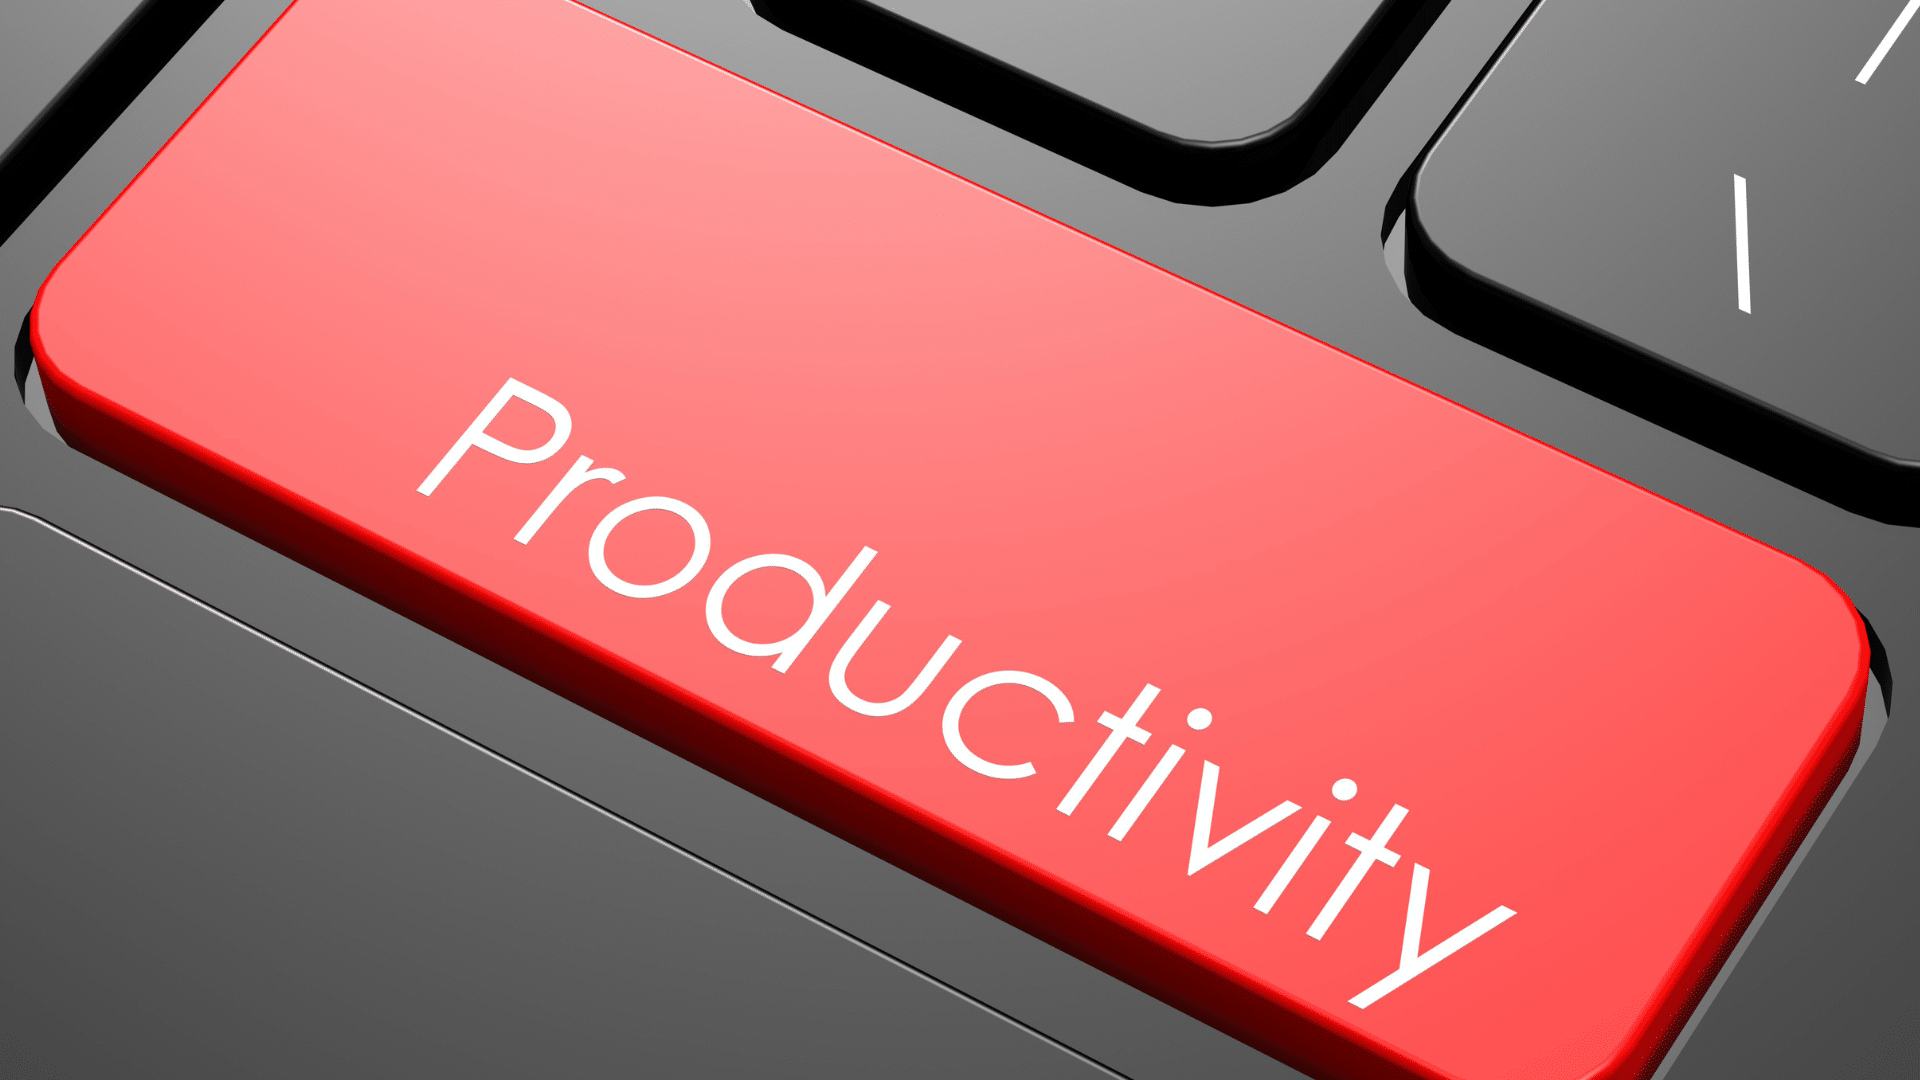 Productivity Windows 10